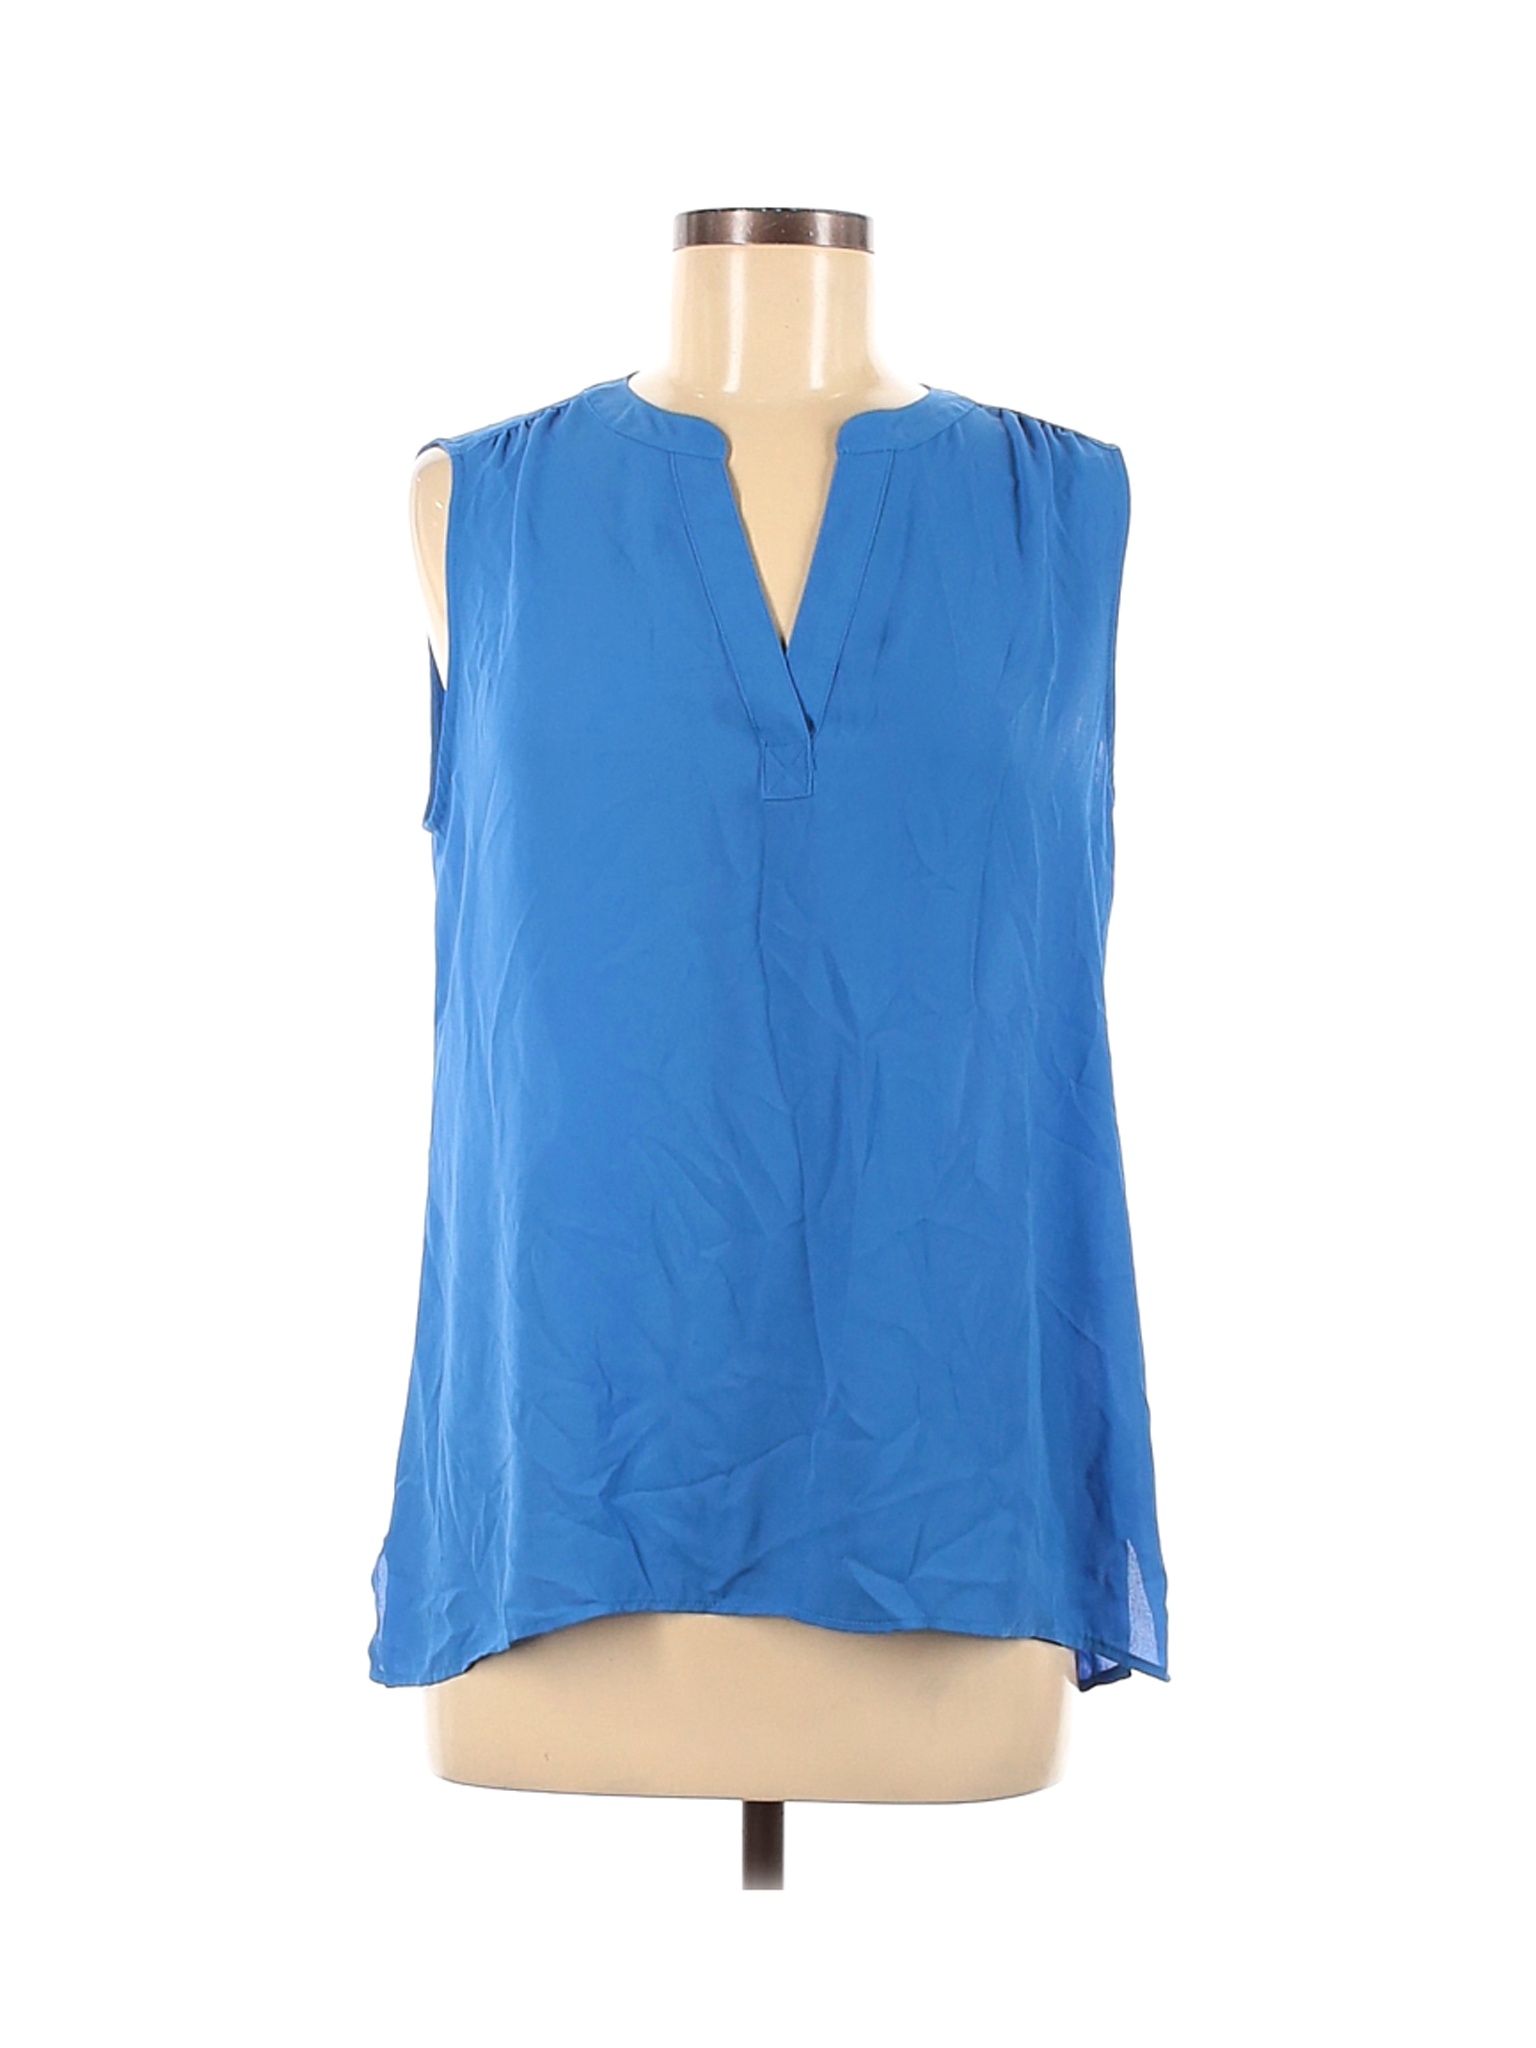 Chaus Women Blue Sleeveless Blouse M | eBay